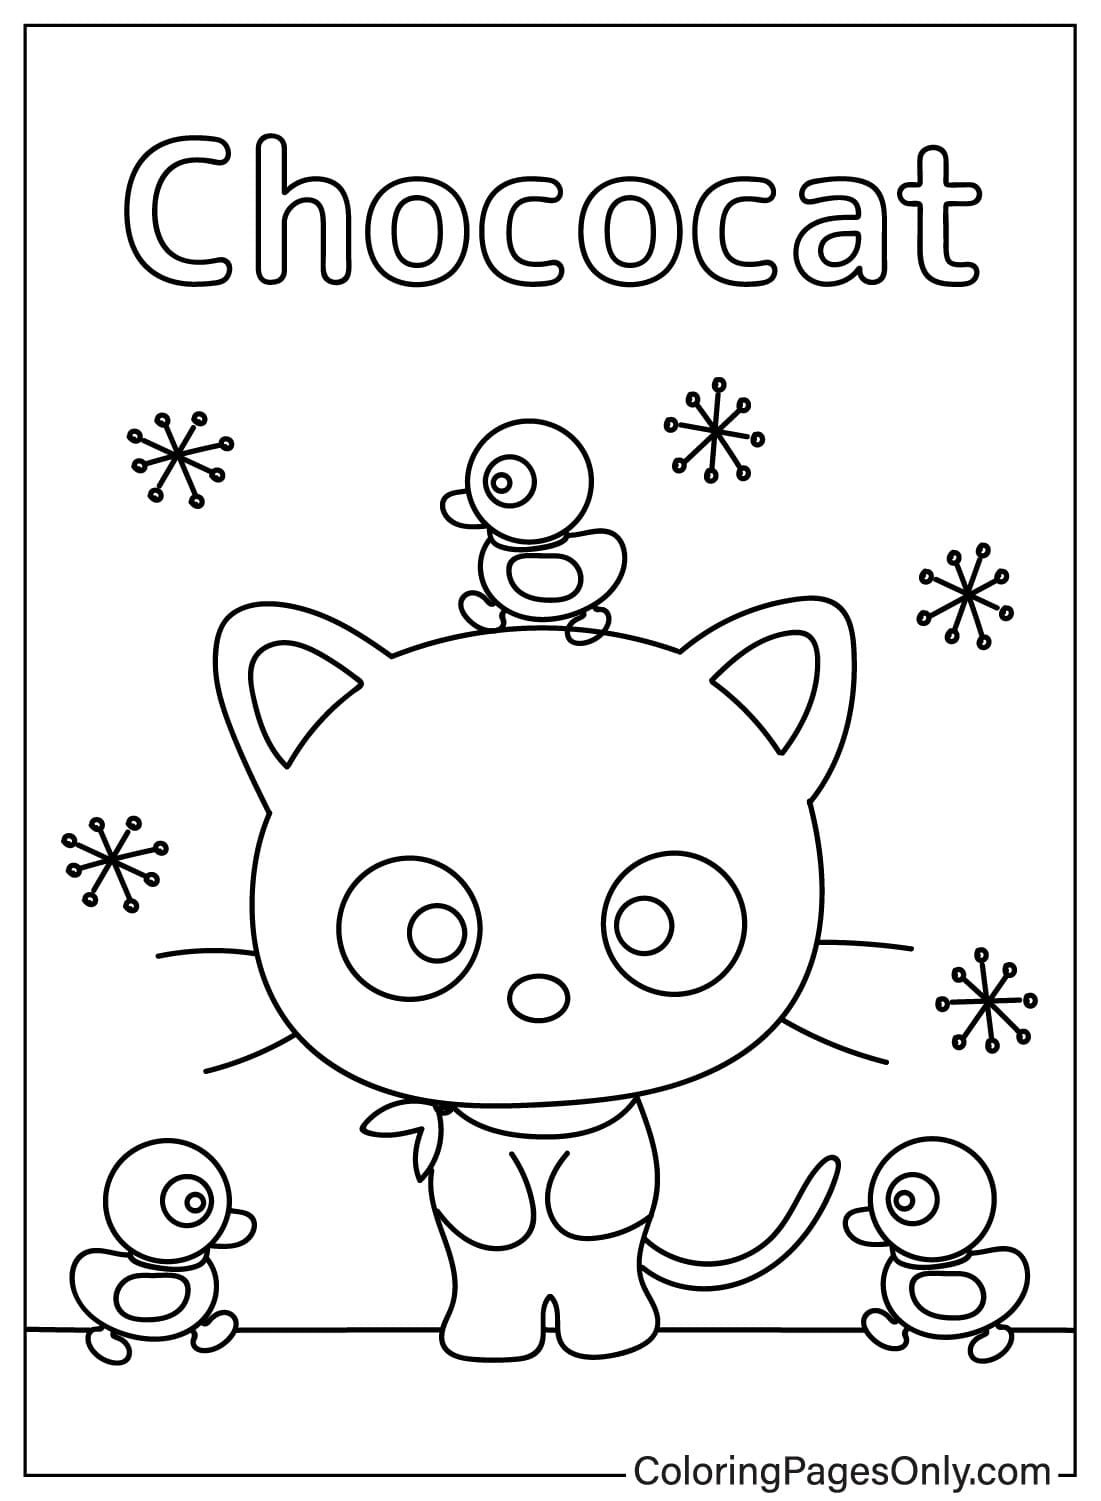 Coloriage Chococat de Chococat